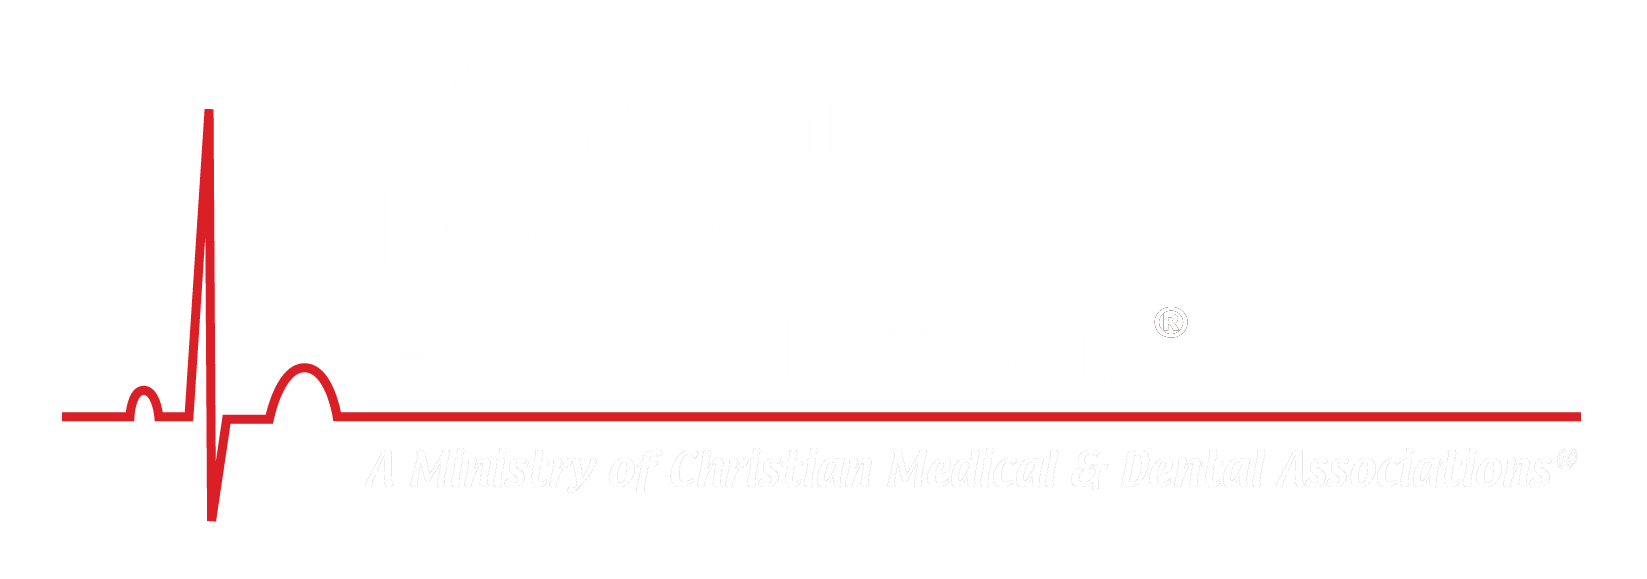 Christian Dental Association Official Logo ® WHITE